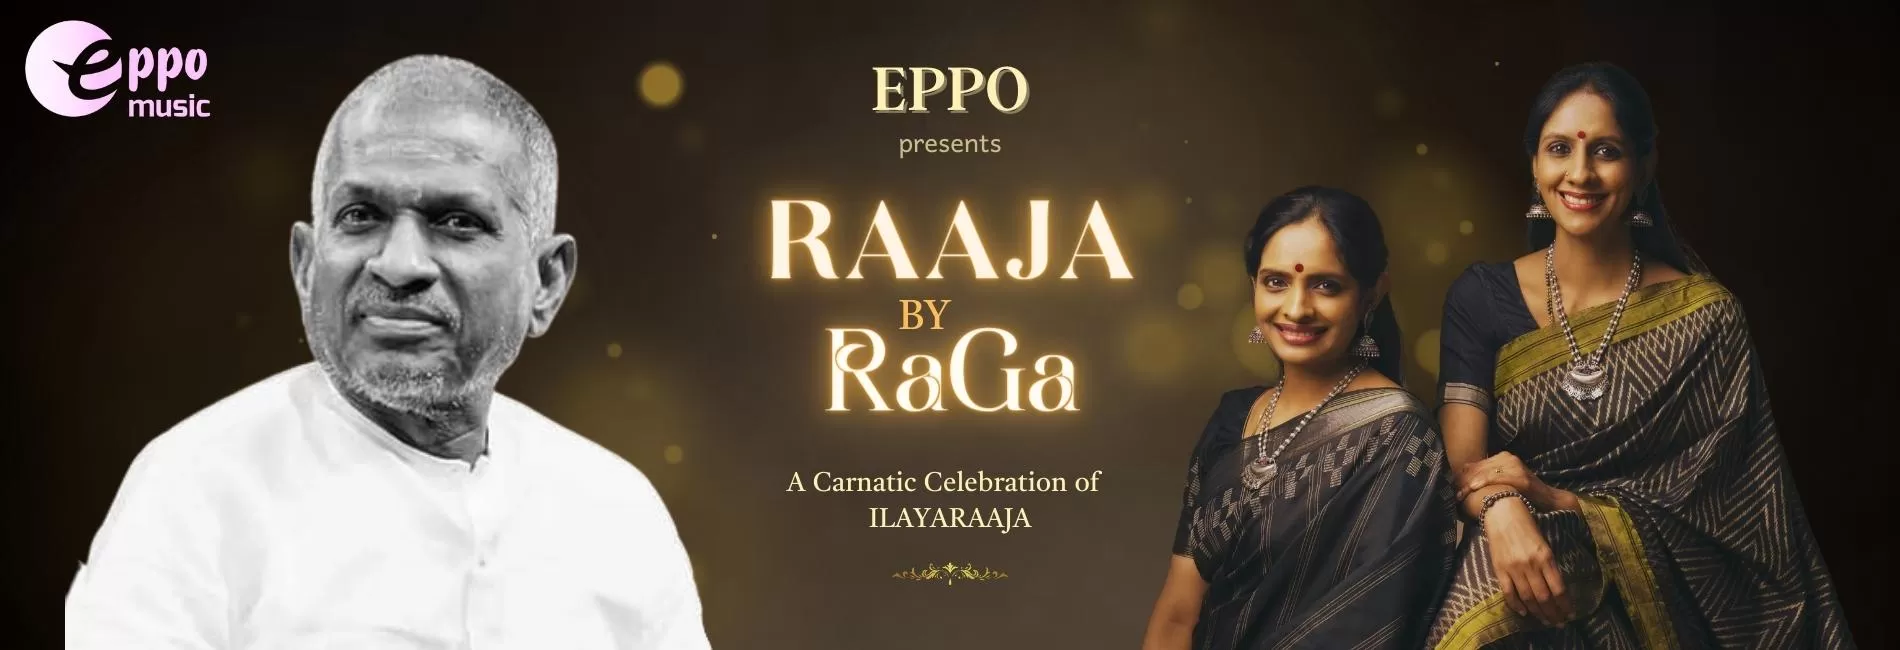 Raaja by RaGa - A Carnatic Celebration of Ilayaraaja